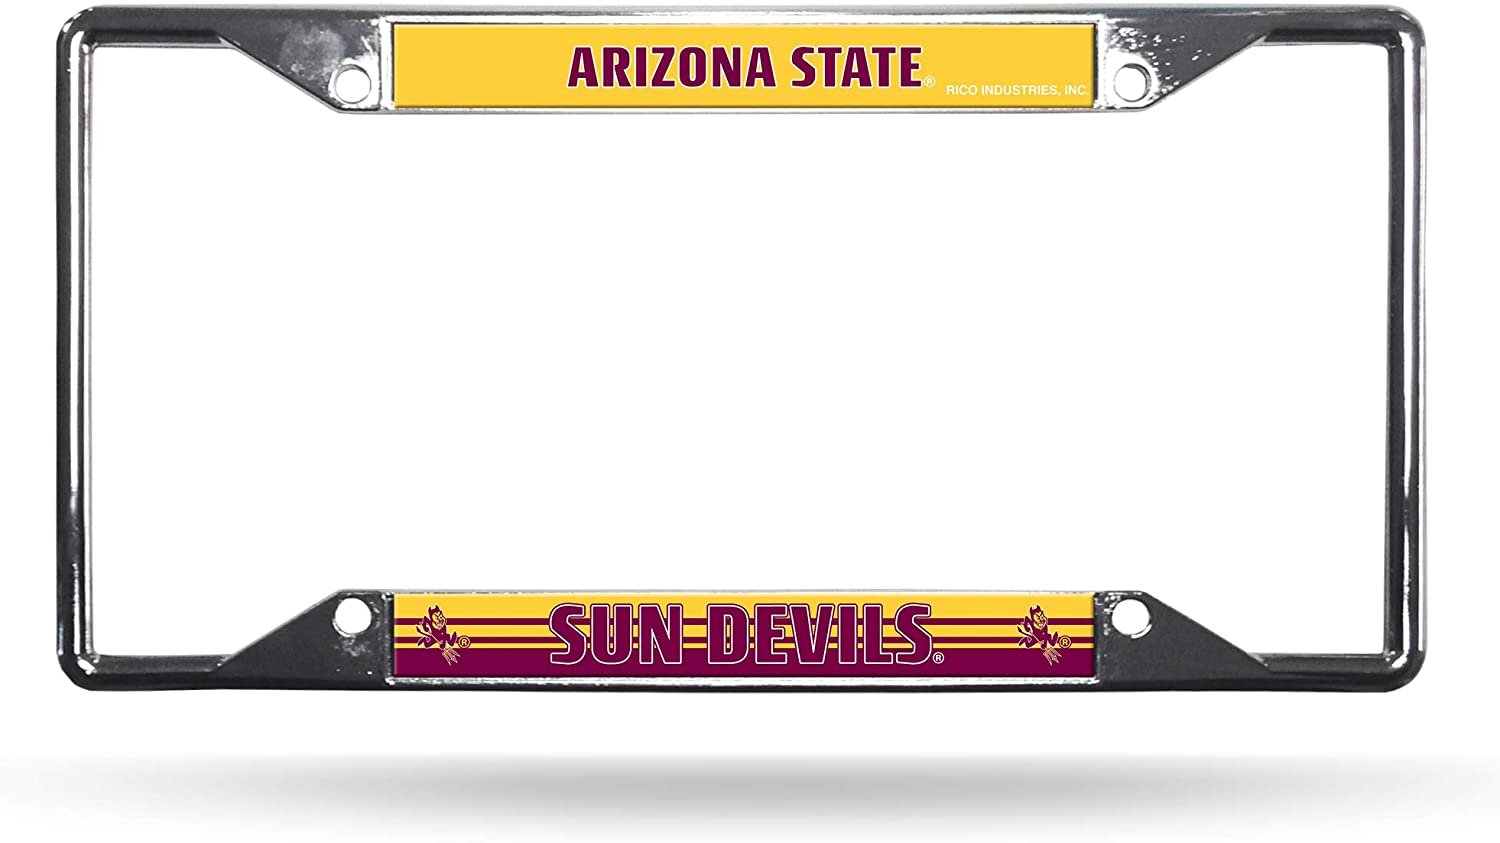 Arizona State University Sun Devils Metal License Plate Frame Chrome Tag Cover, EZ View Design, 12x6 Inch